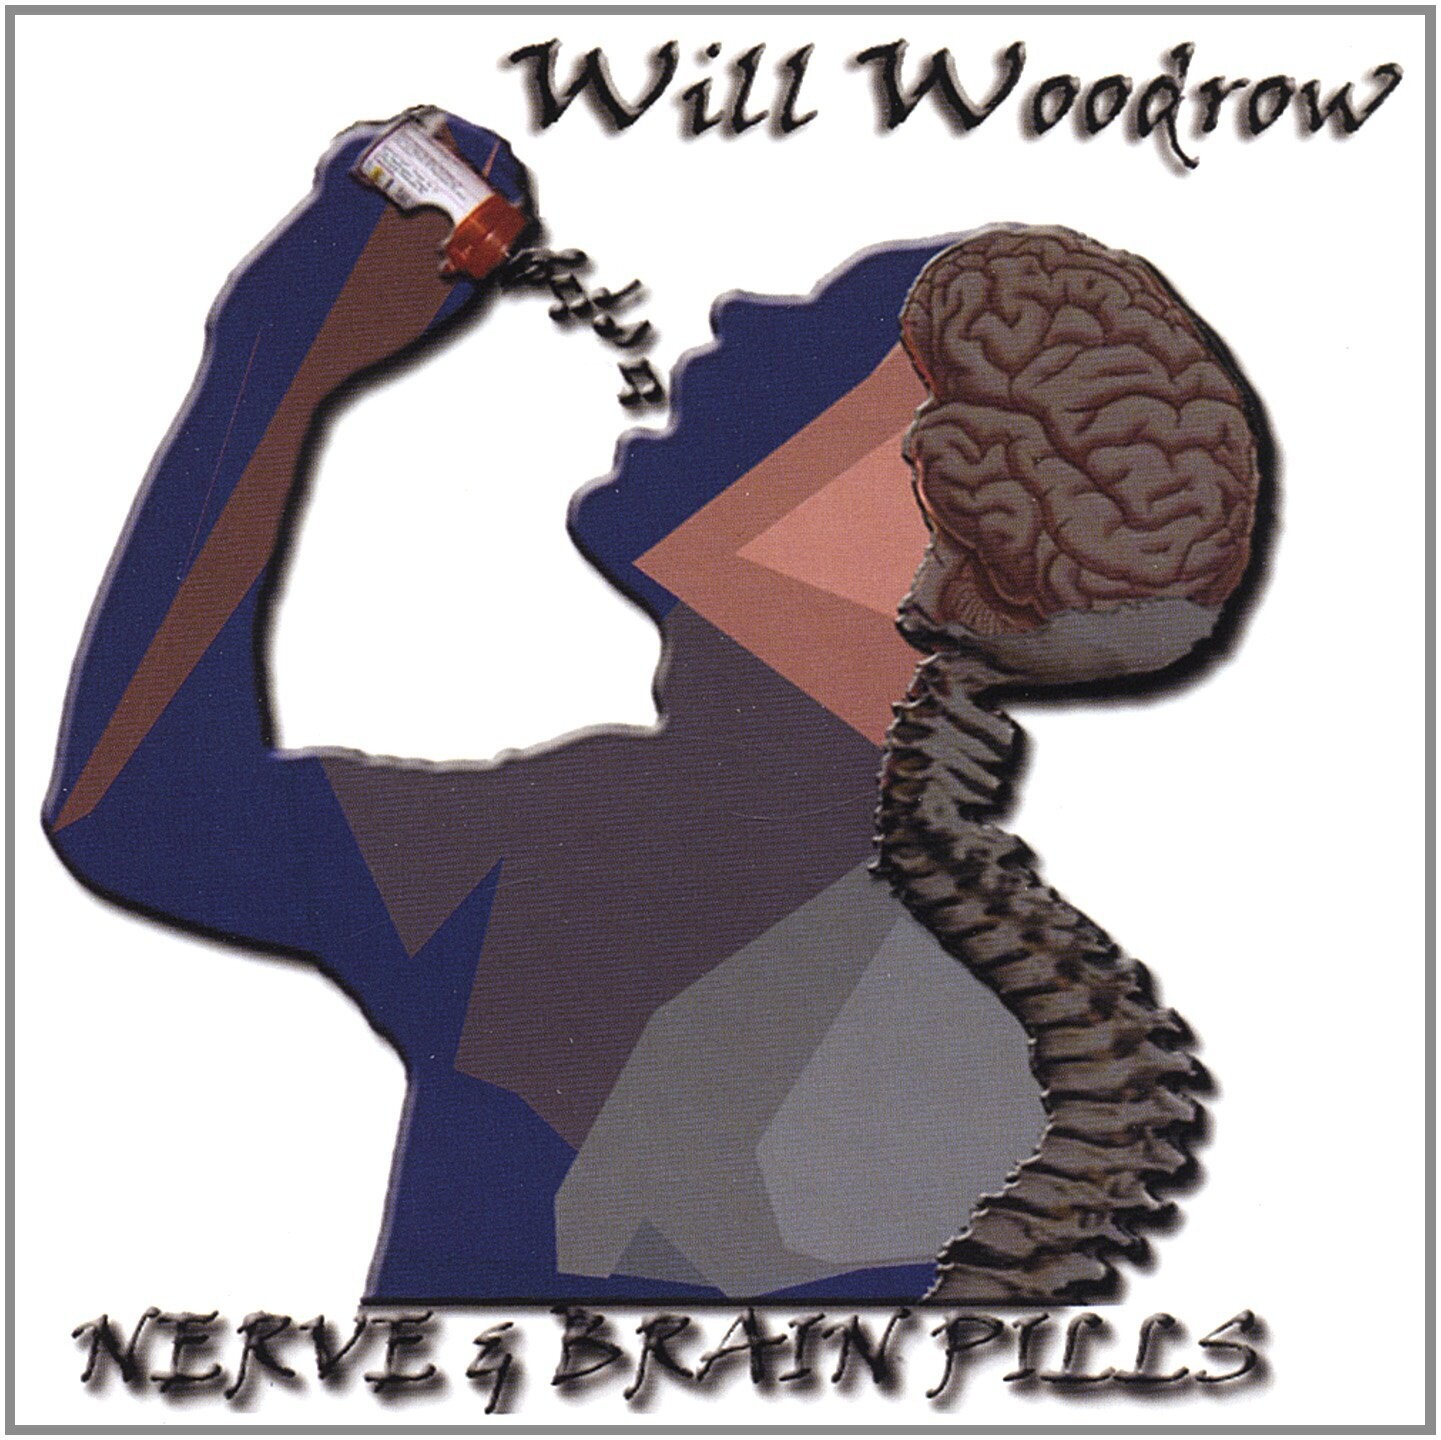 Will Woodrow - Nerve & Brain Pills